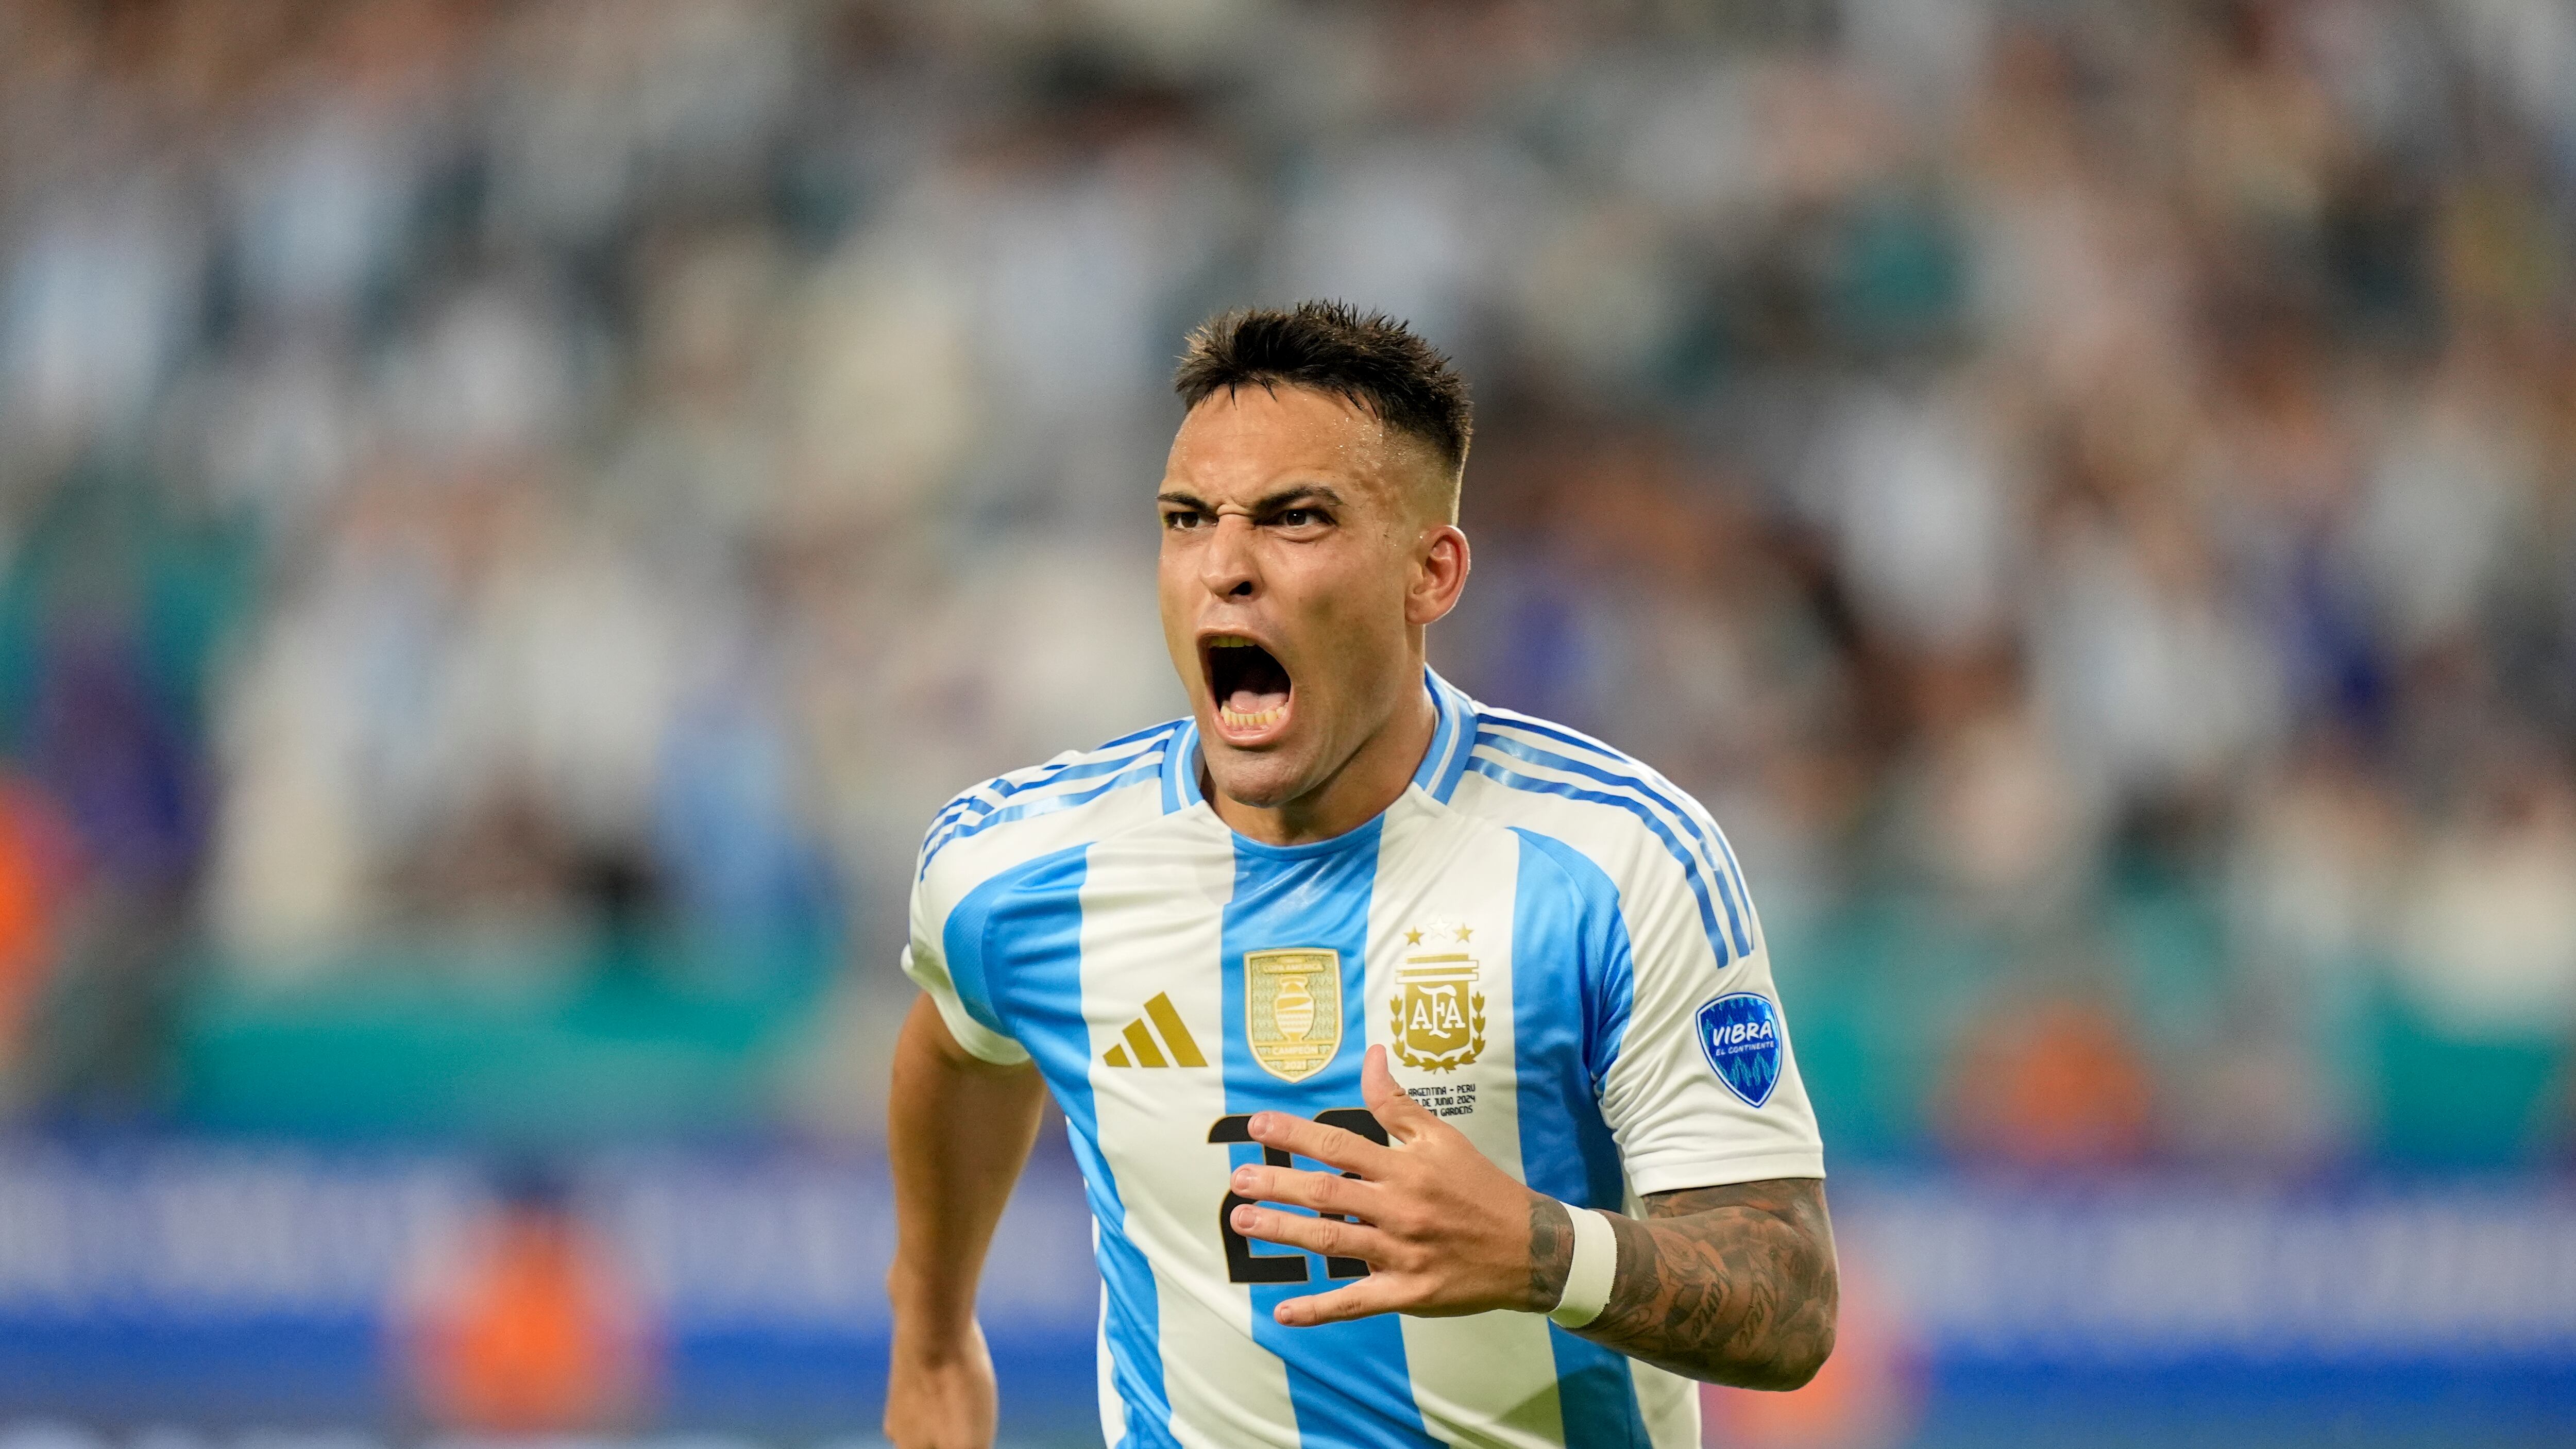 Argentina’s Lautaro Martínez celebrates scoring his side’s opening goal against Peru (Lynne Sladky/AP)